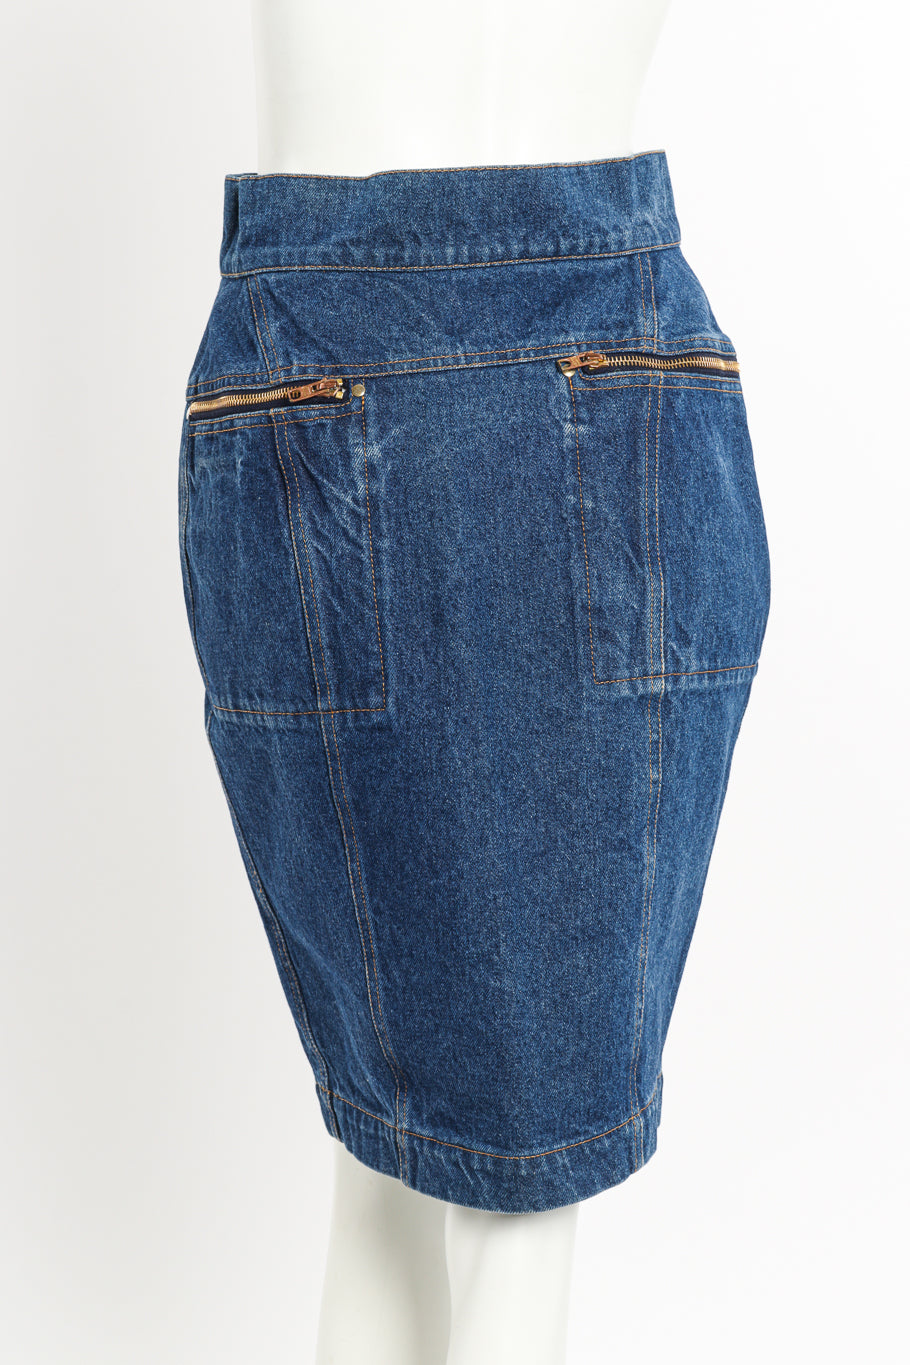 Vintage Alaia Denim Pencil Skirt back on mannequin closeup @recessla